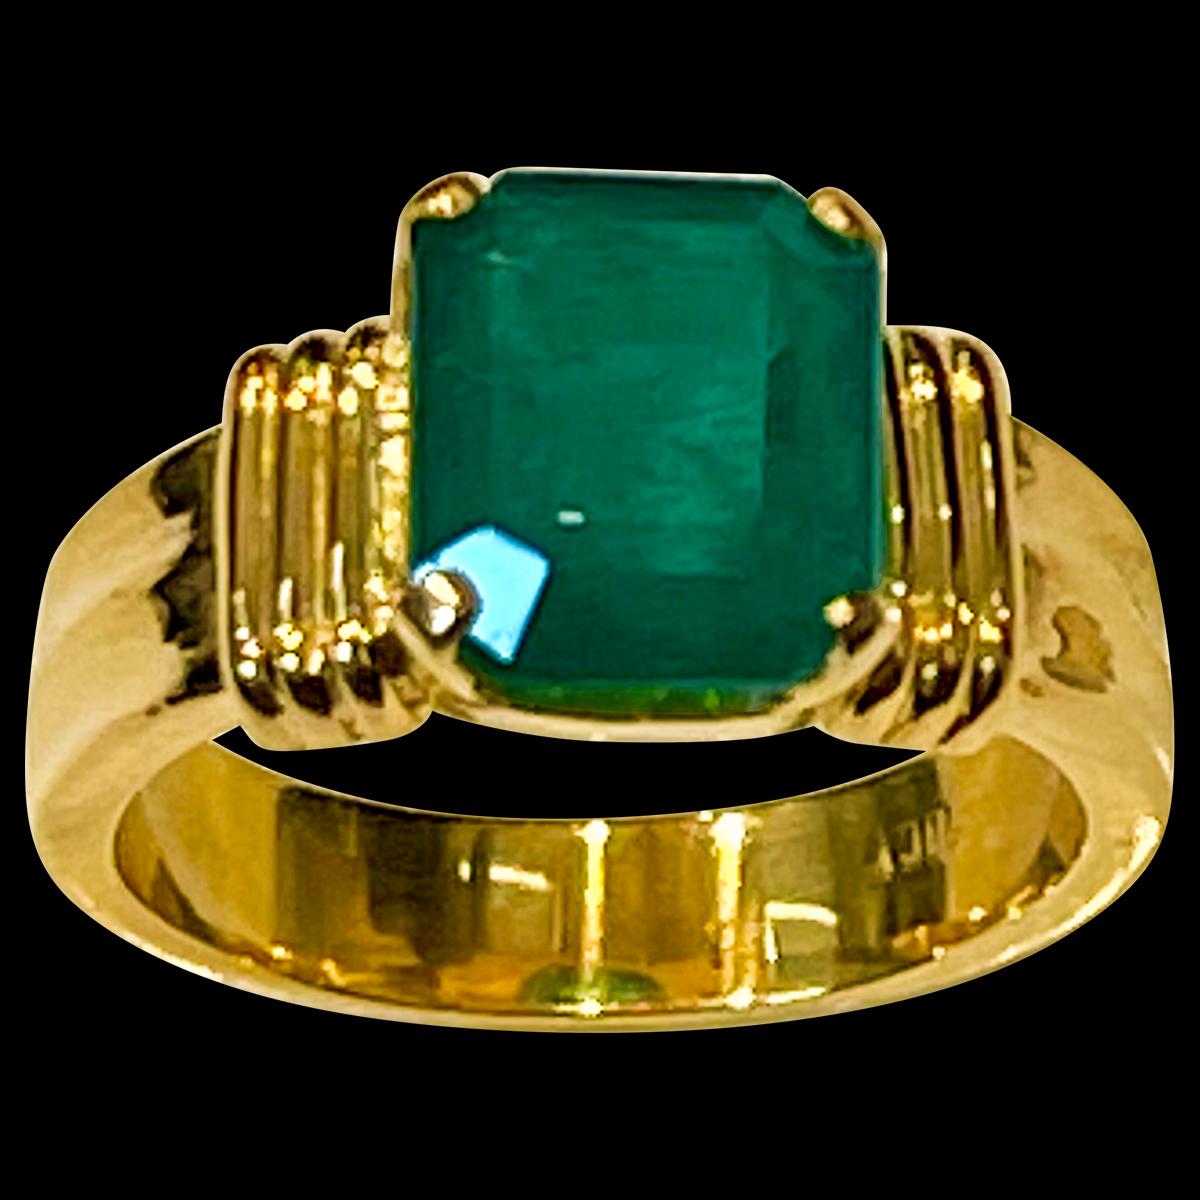 3.5 carat emerald ring